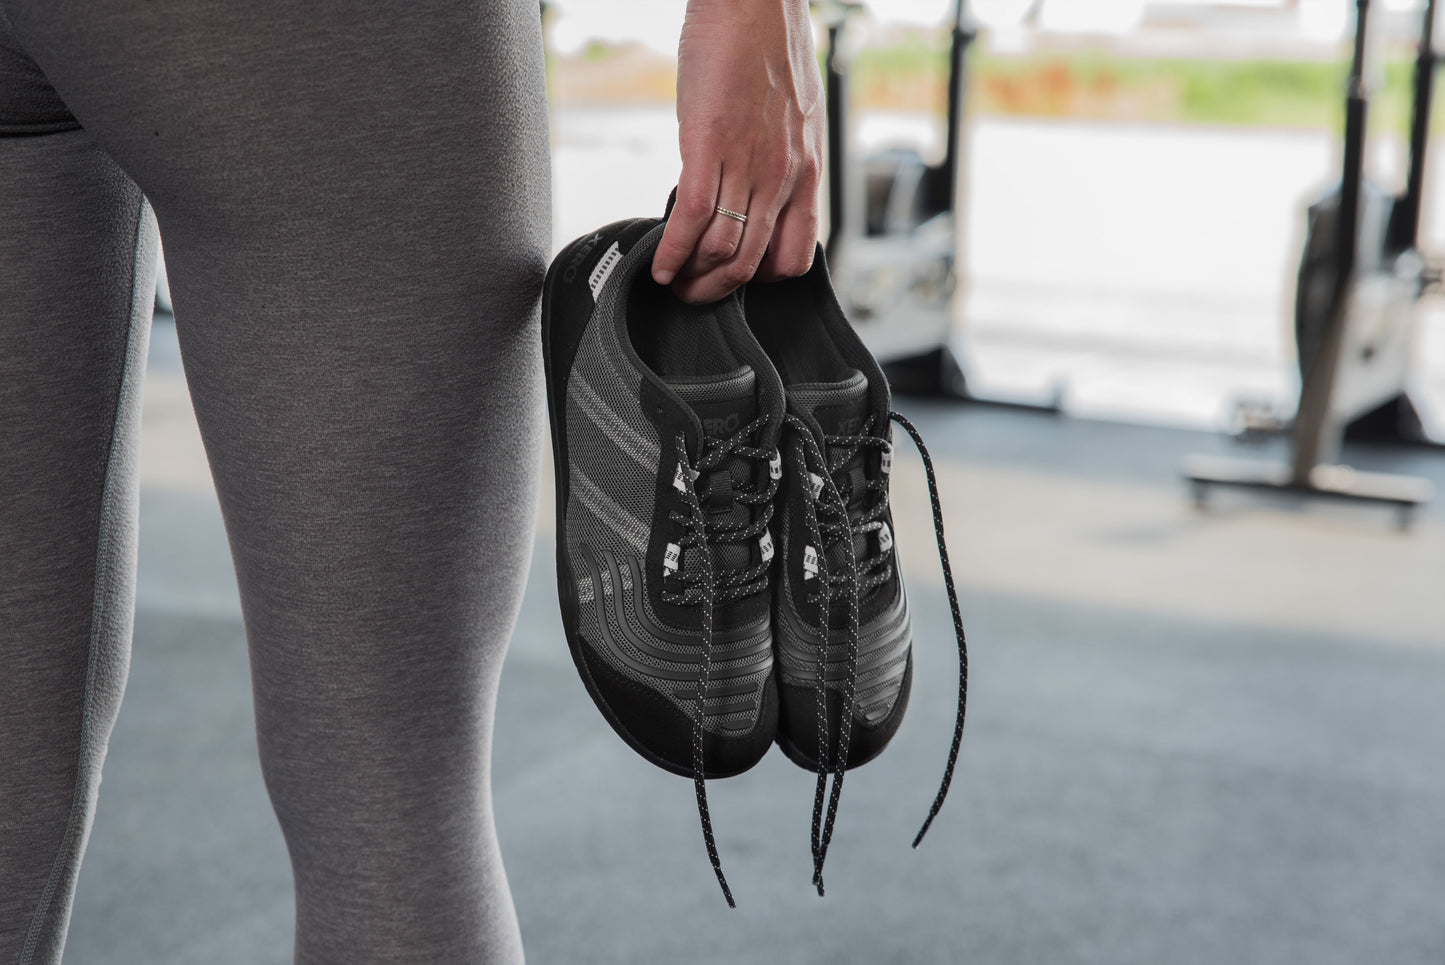 Xero Shoes 360° Womens - Træningssko